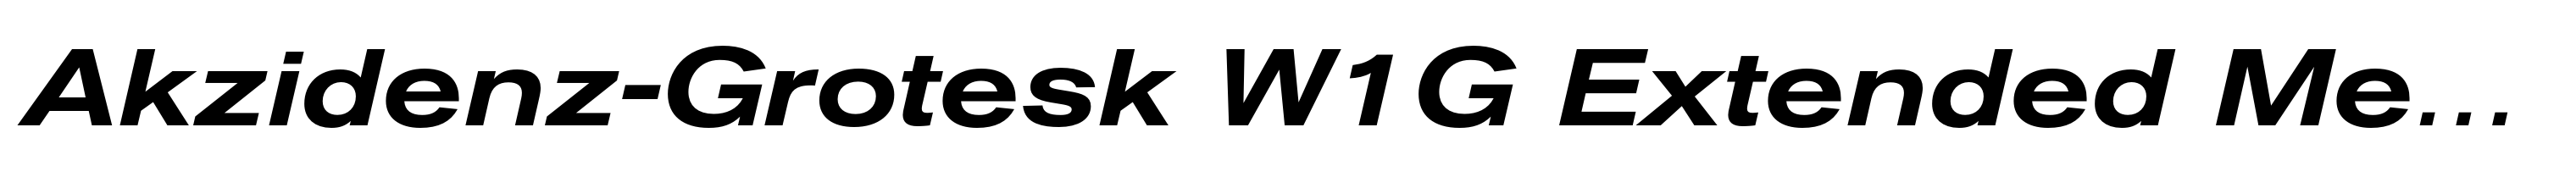 Akzidenz-Grotesk W1G Extended Medium Italic